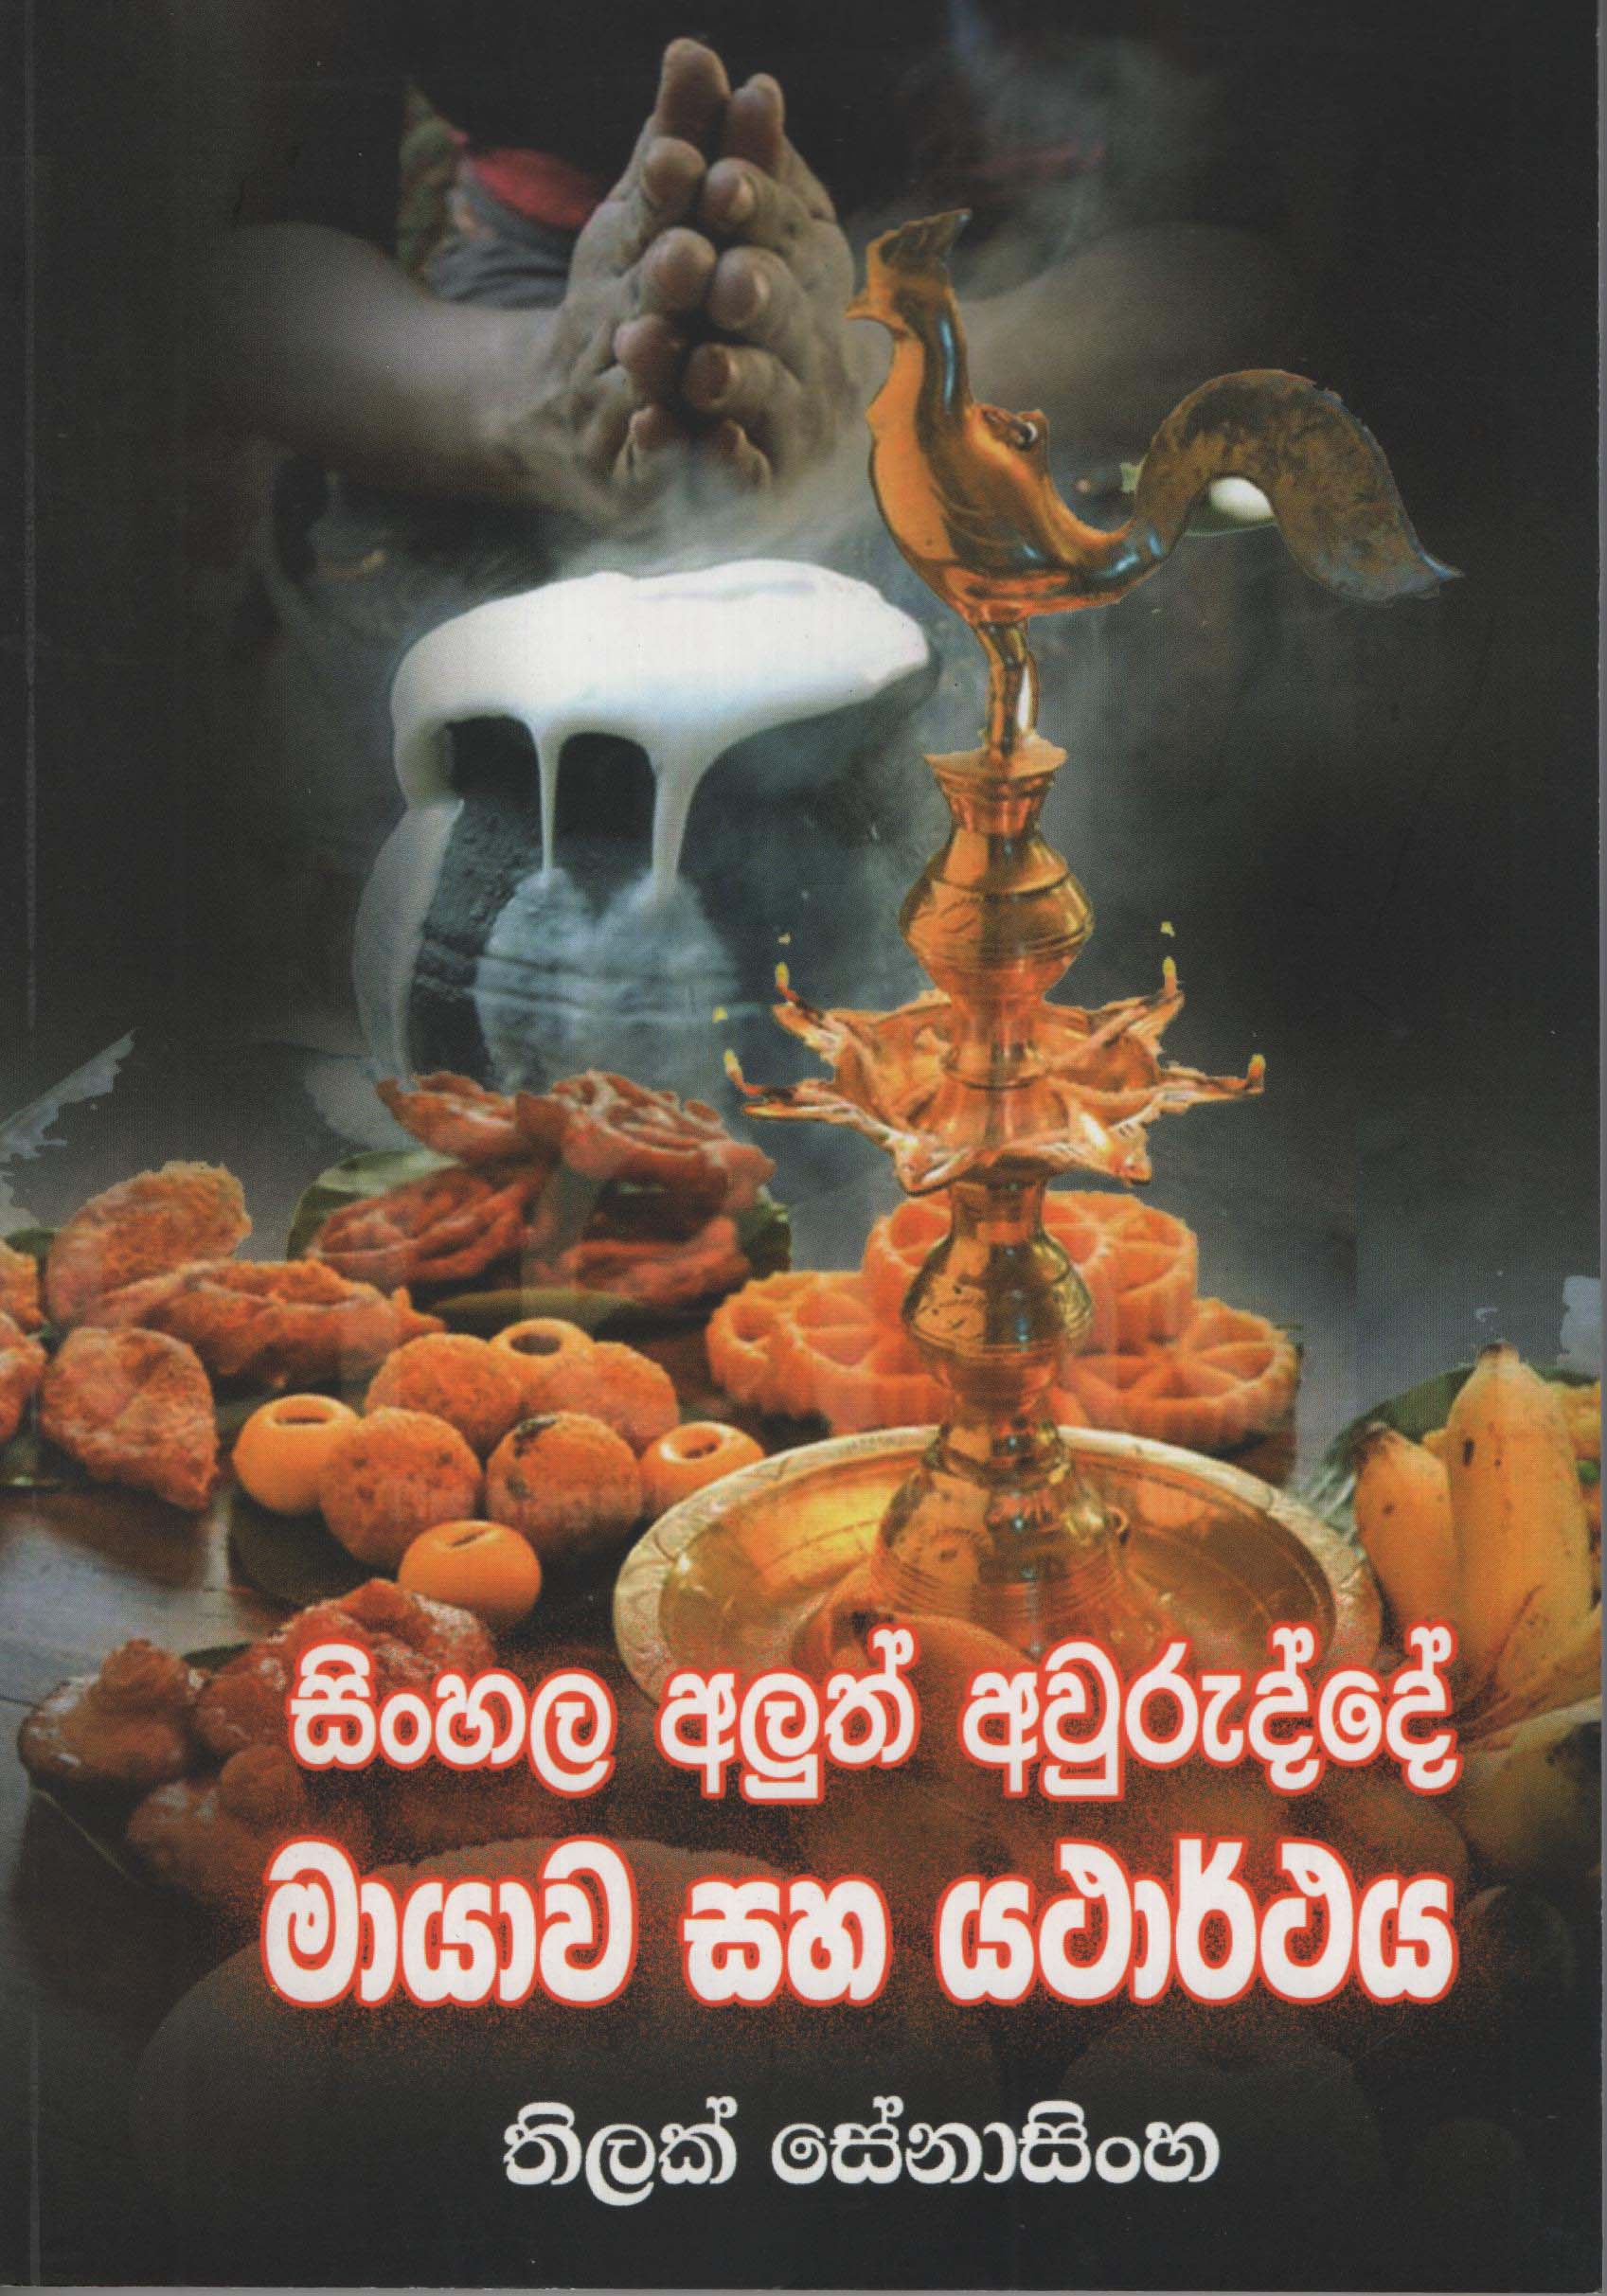 Sinhala Aluth Awurudde Mayawa Saha Yatharthaya